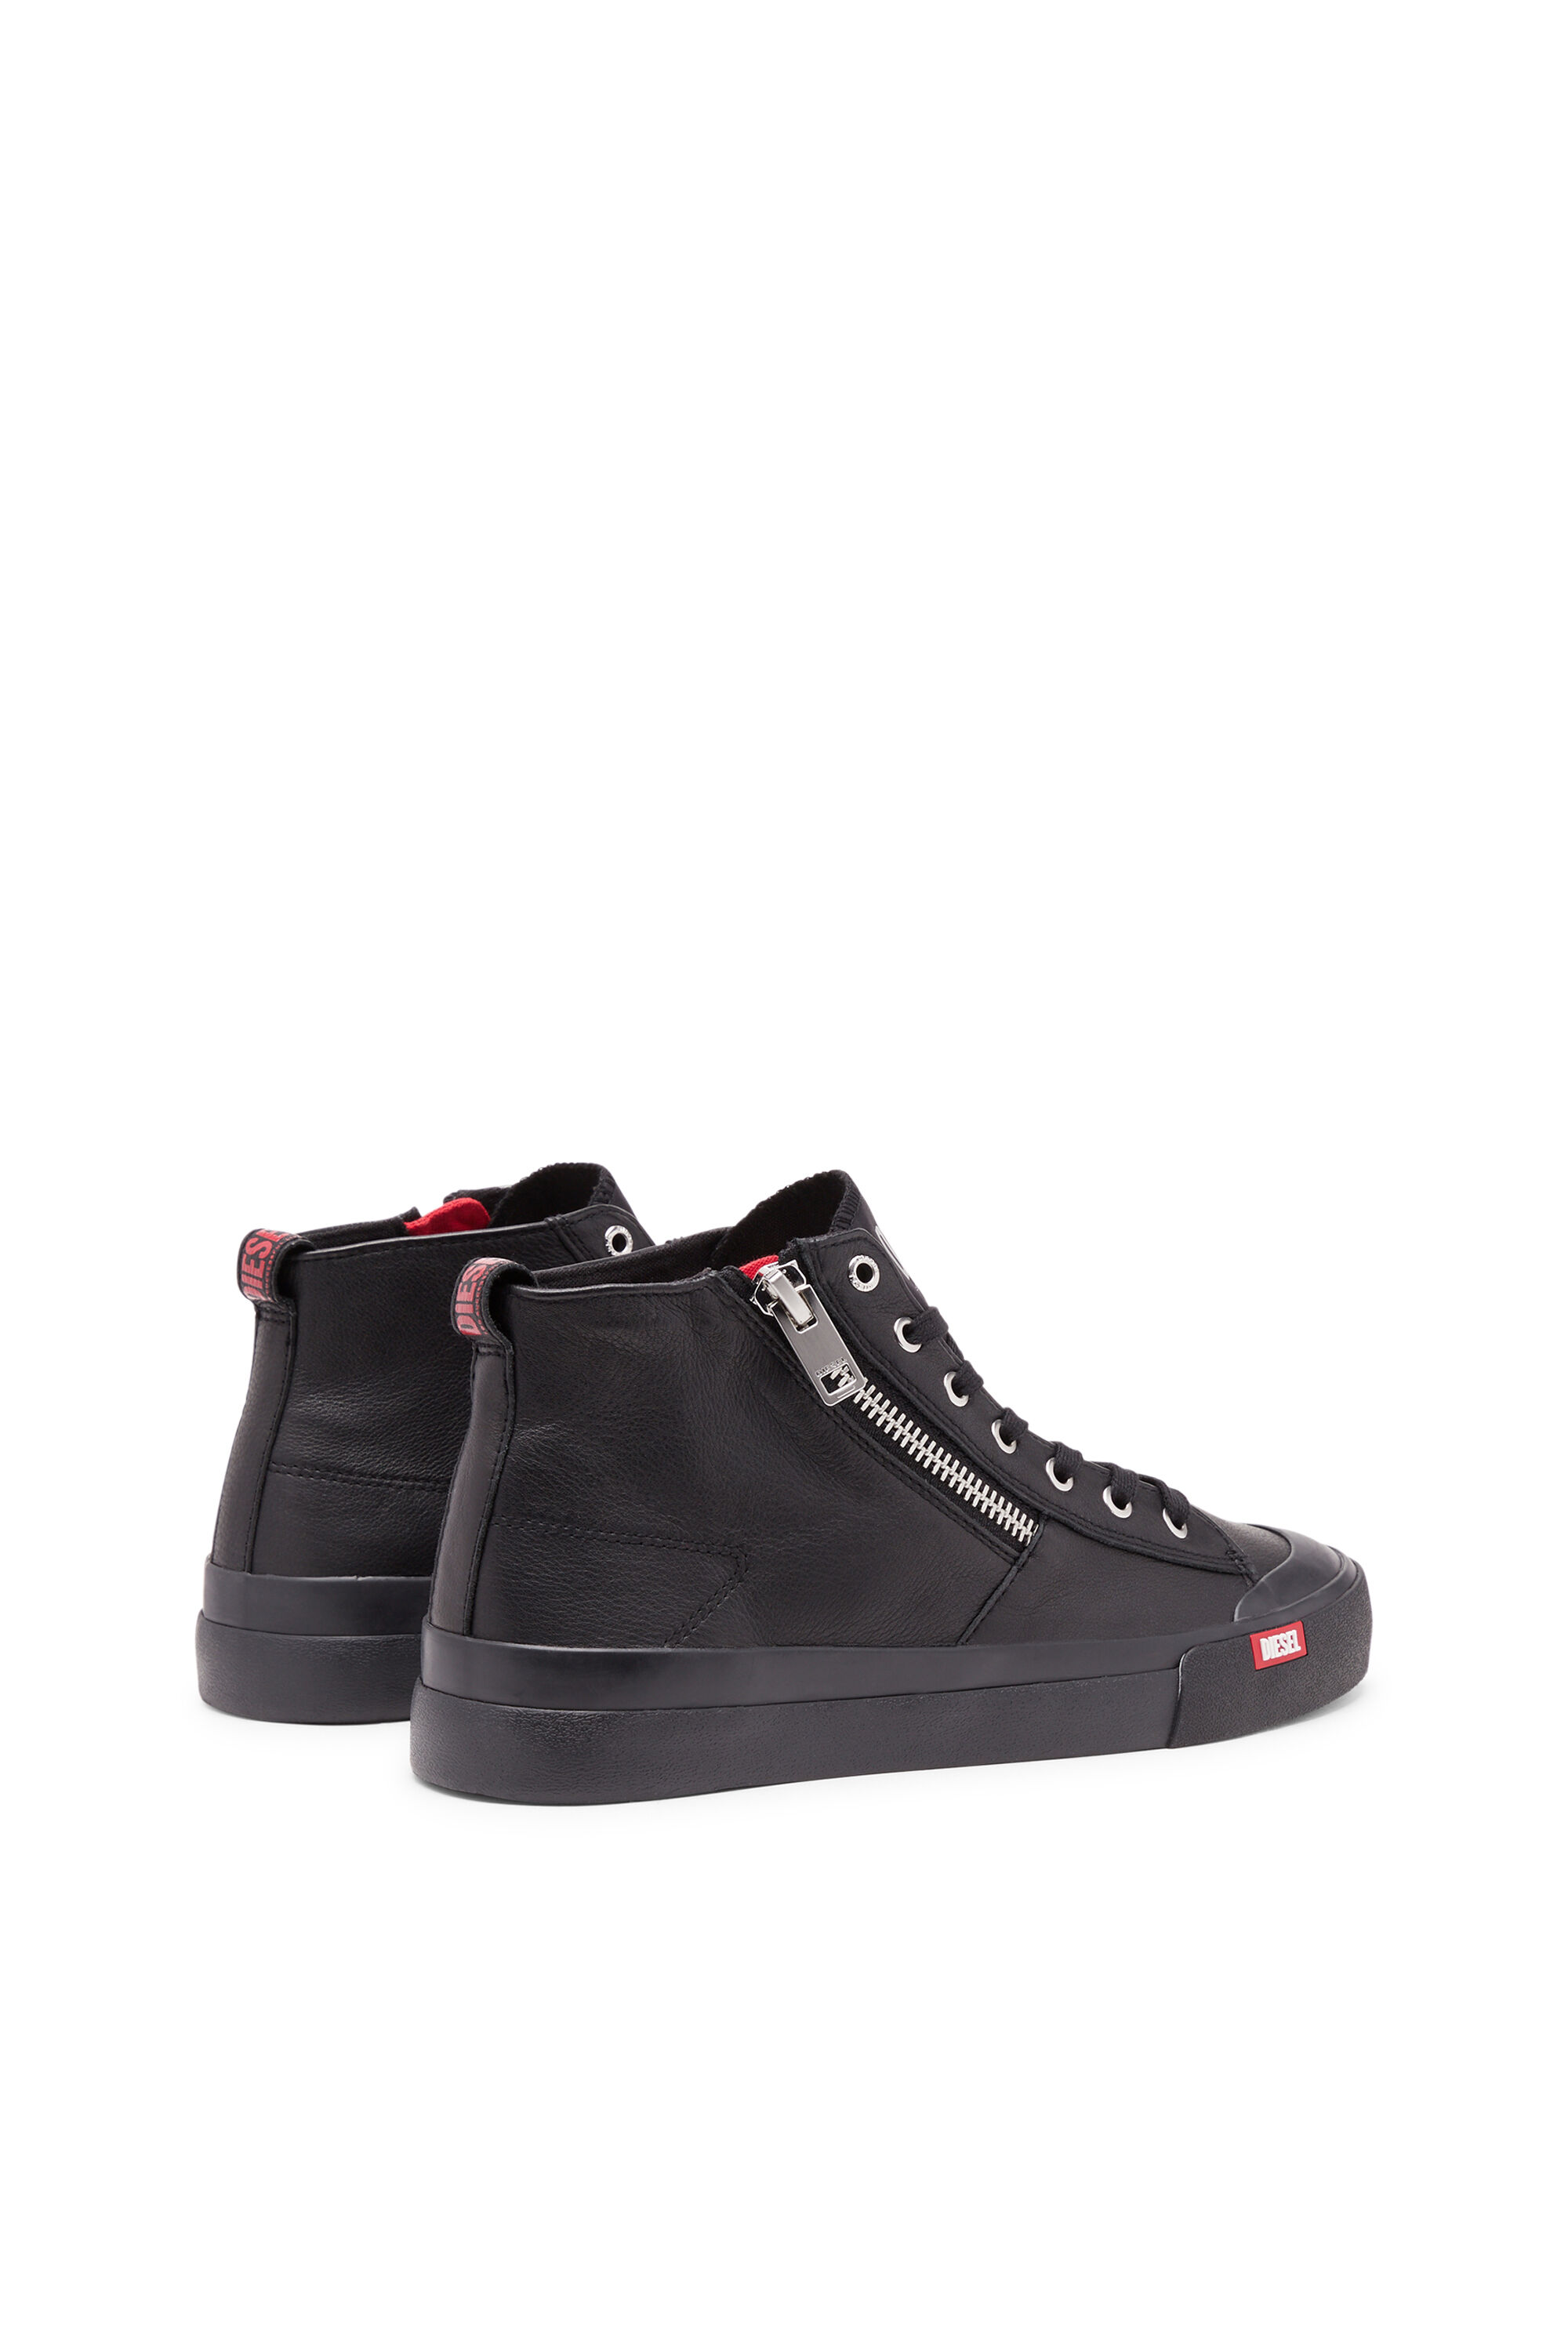 S-ATHOS ZIP S-Athos Zip - High-top sneakers in premium leather 